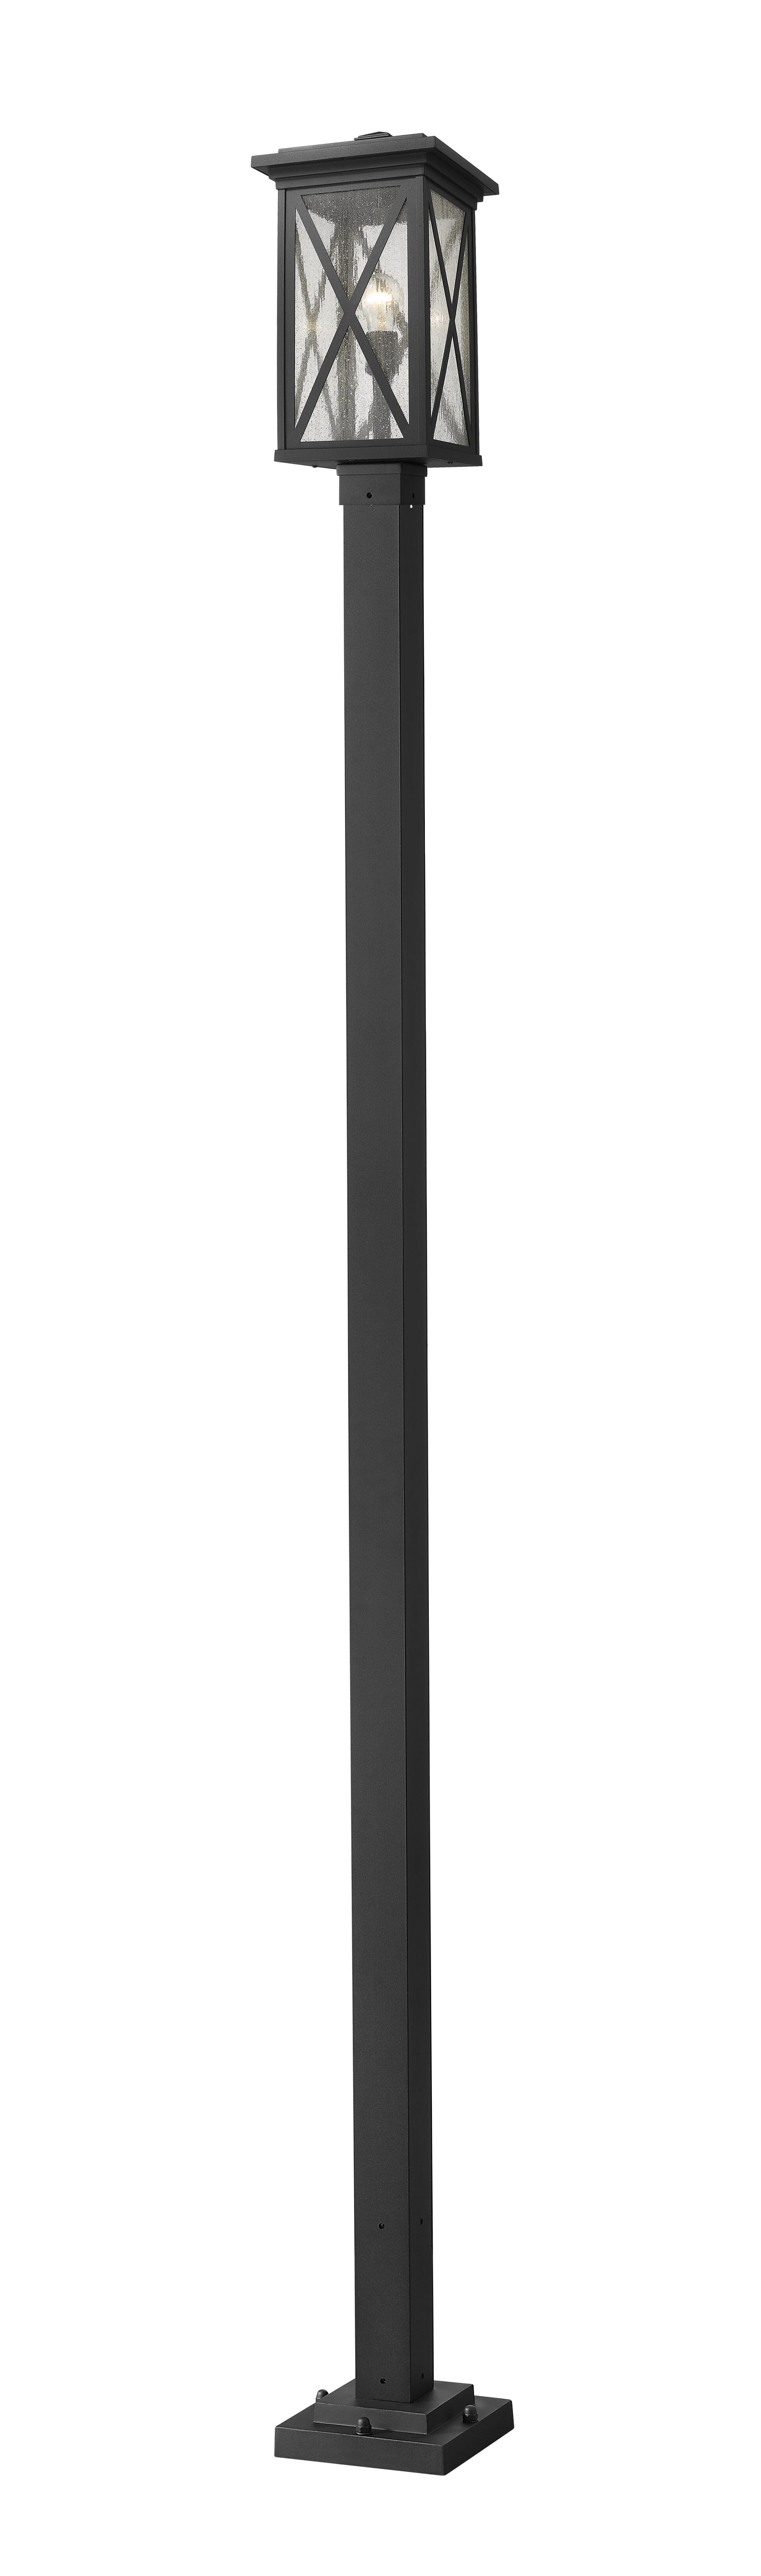 Brookside 1-Light Outdoor Post Mounted Fixture Light In Black